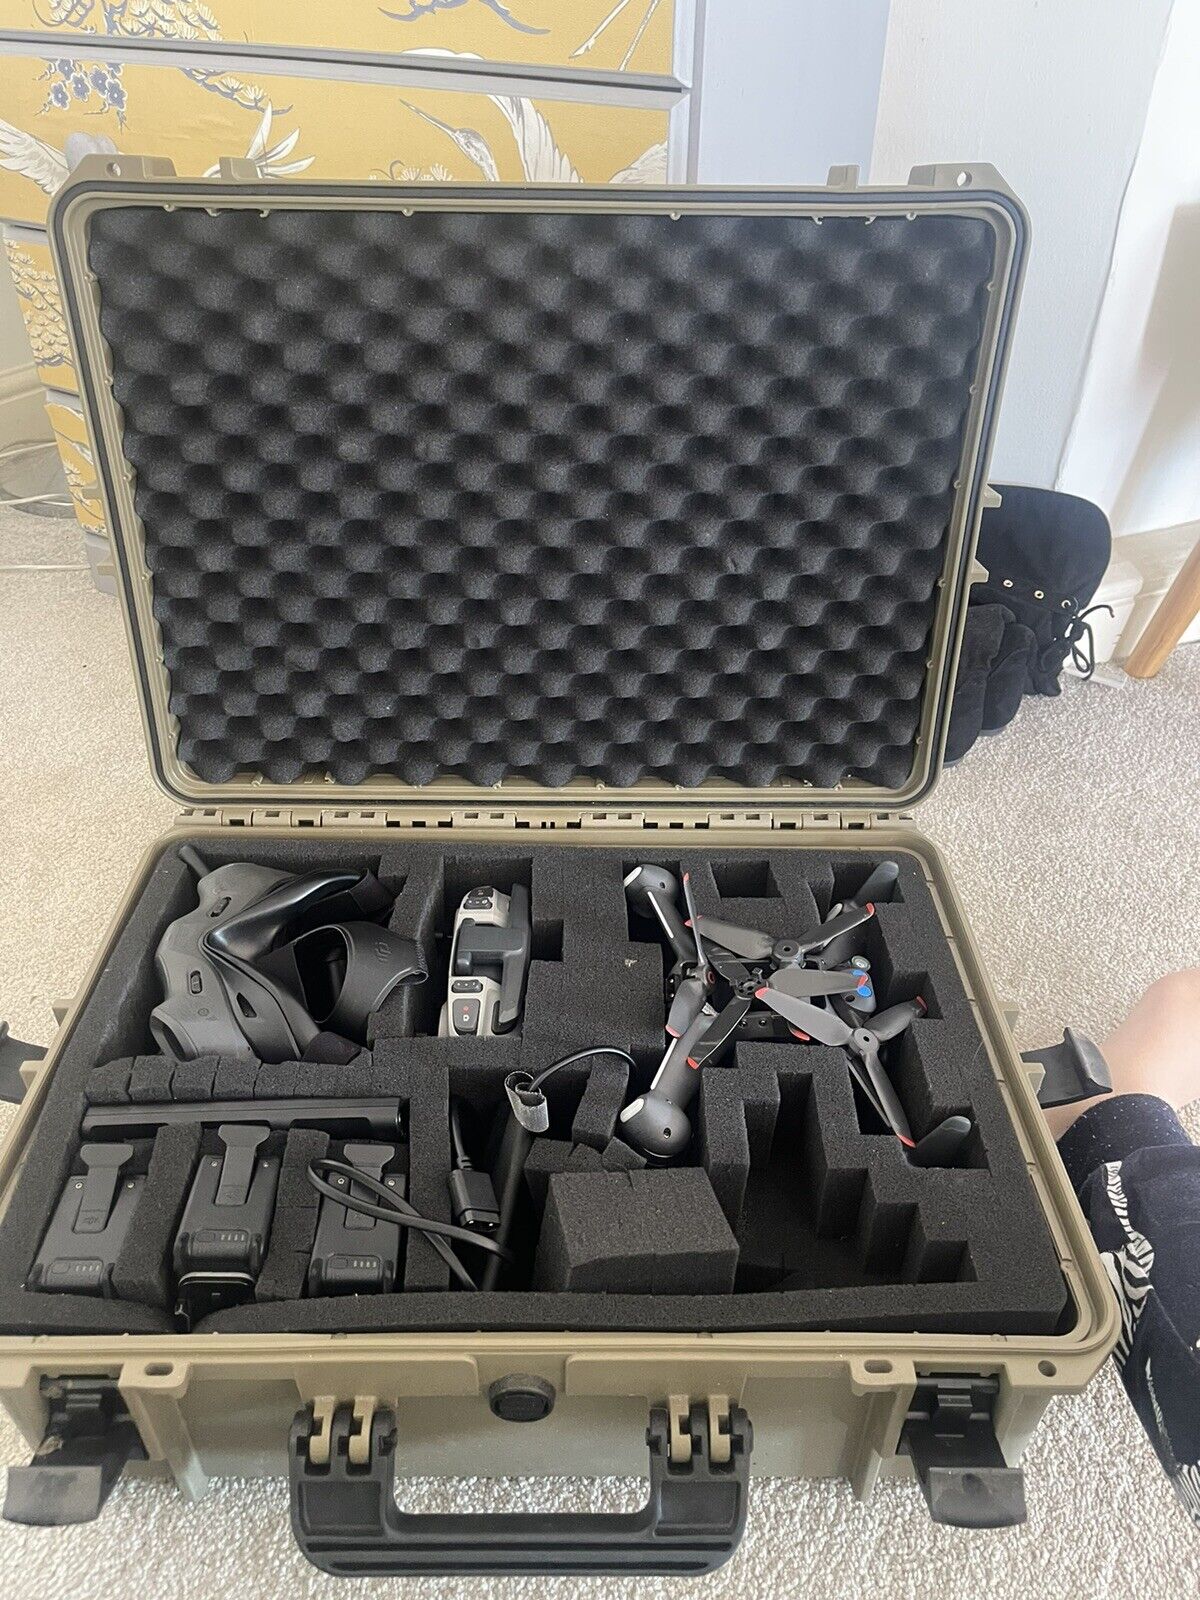 DJI FPV Ready-to-Fly Drone Kit